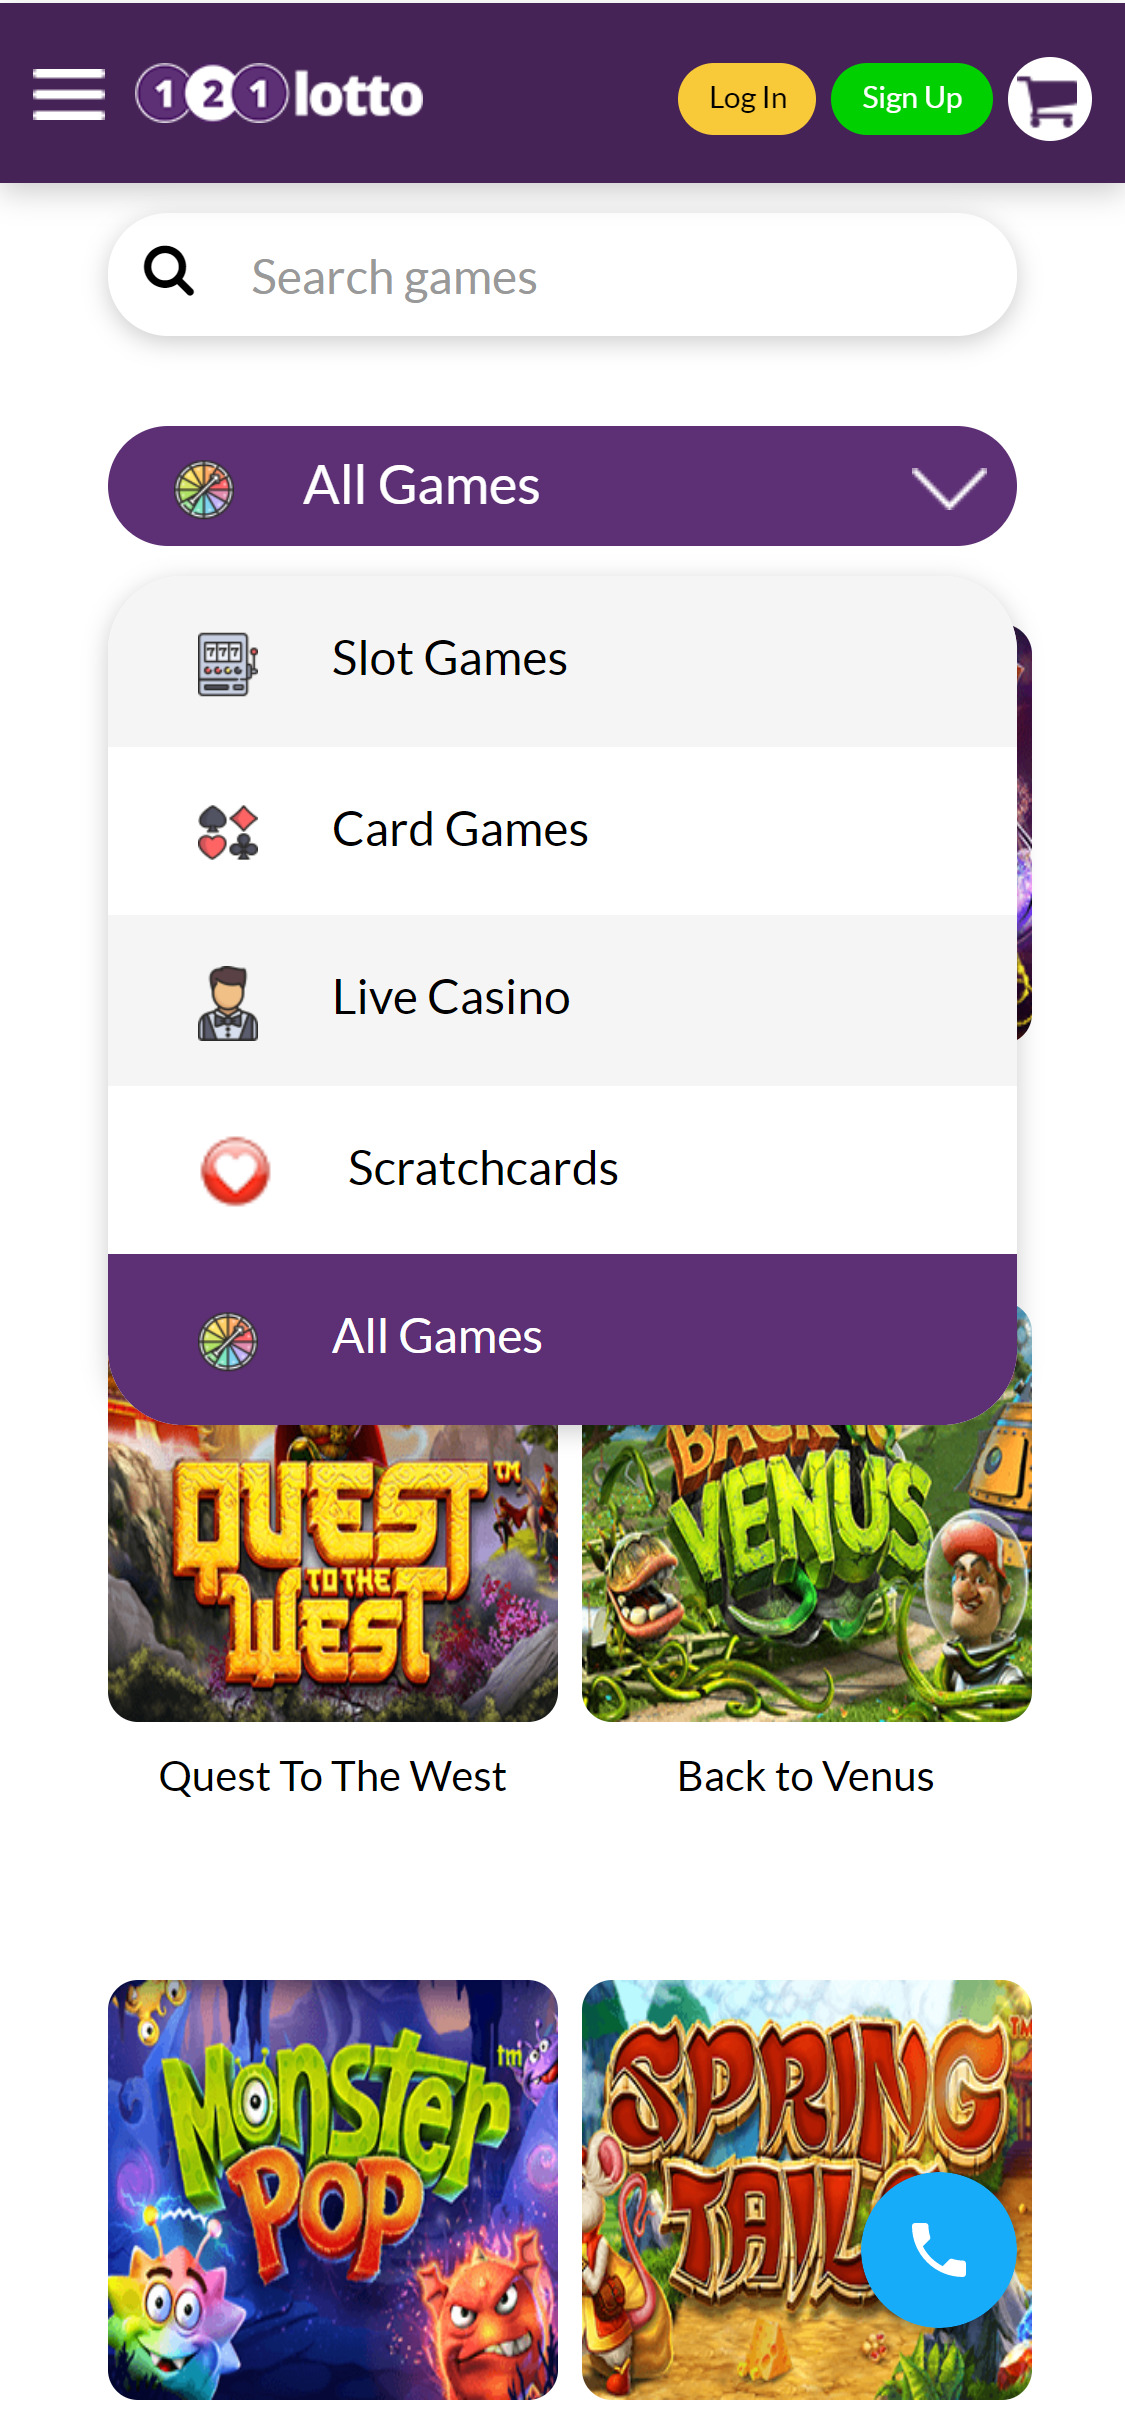 121Lotto Casino Mobile Games Review